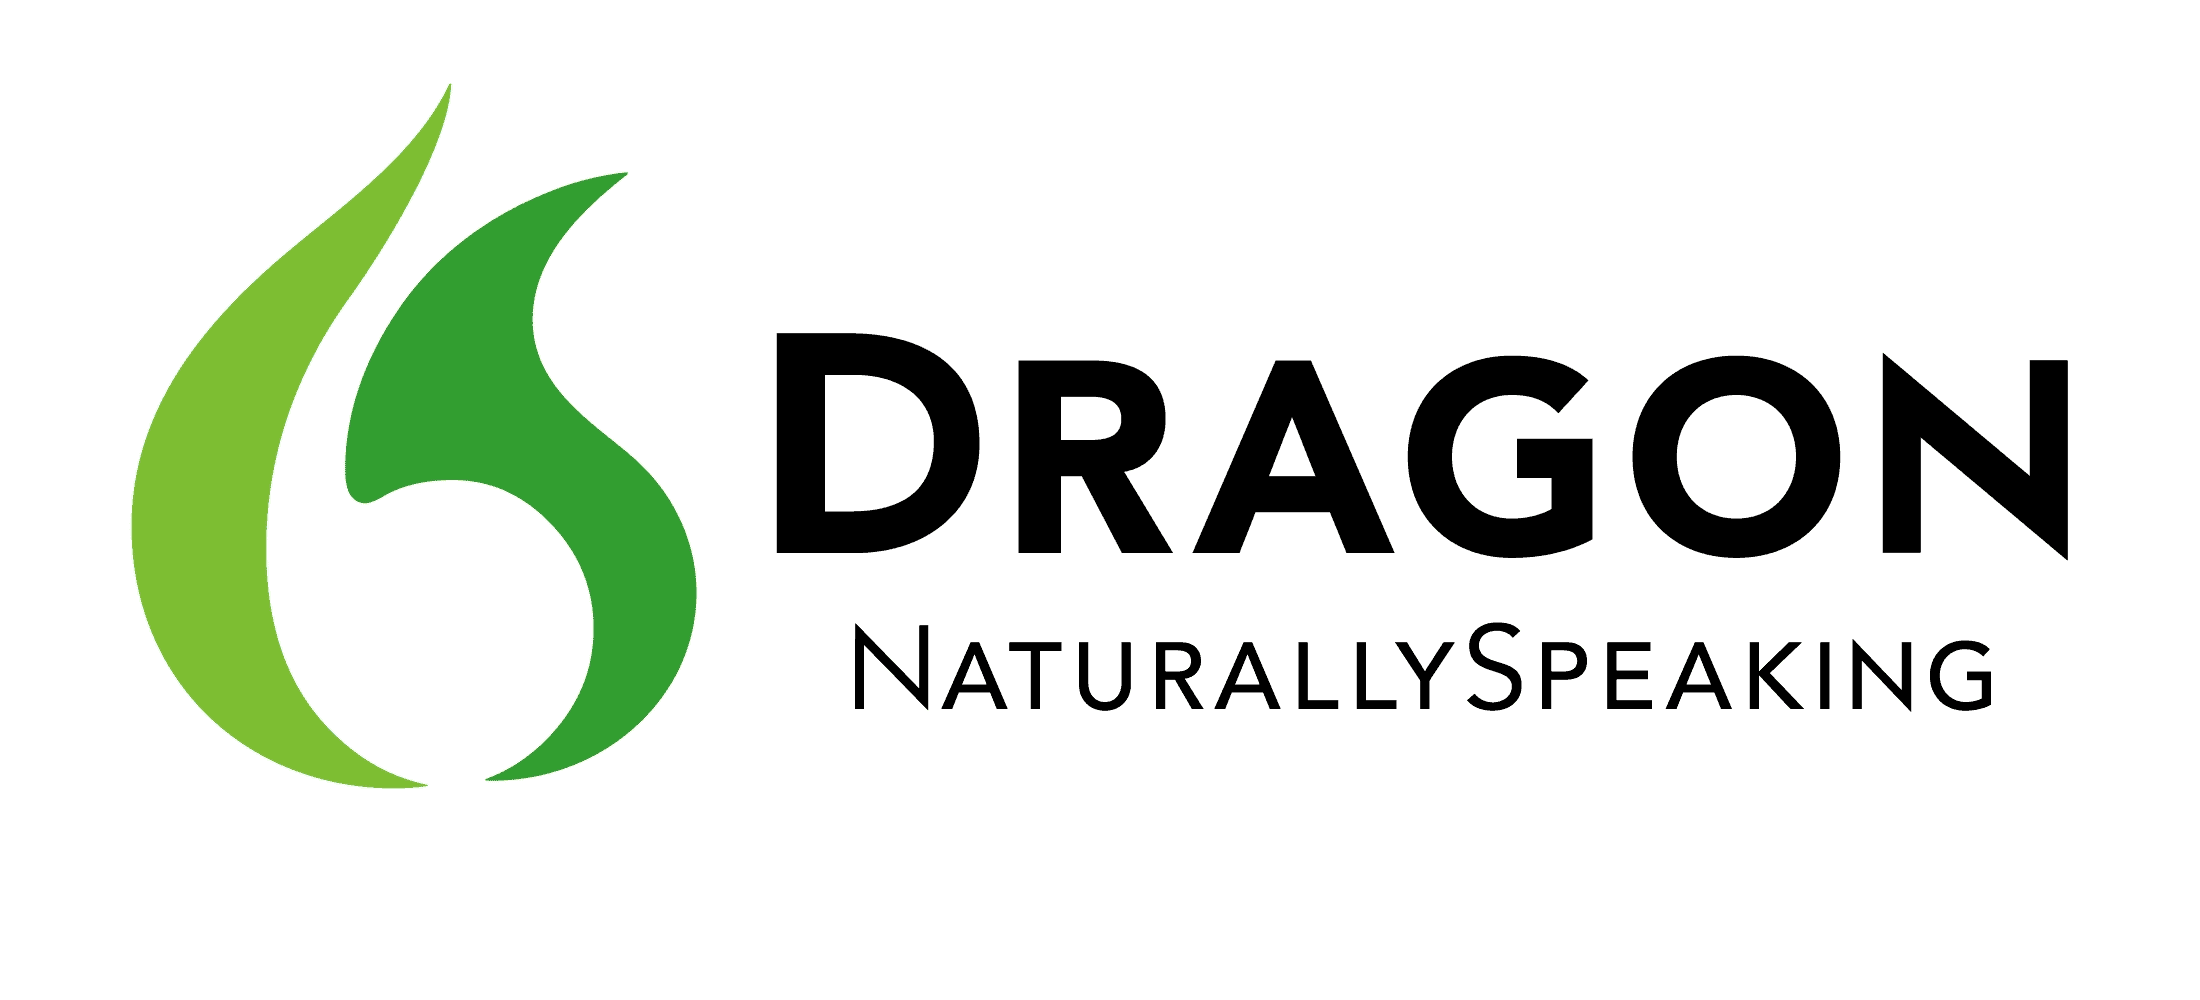 Dragon naturally speaking